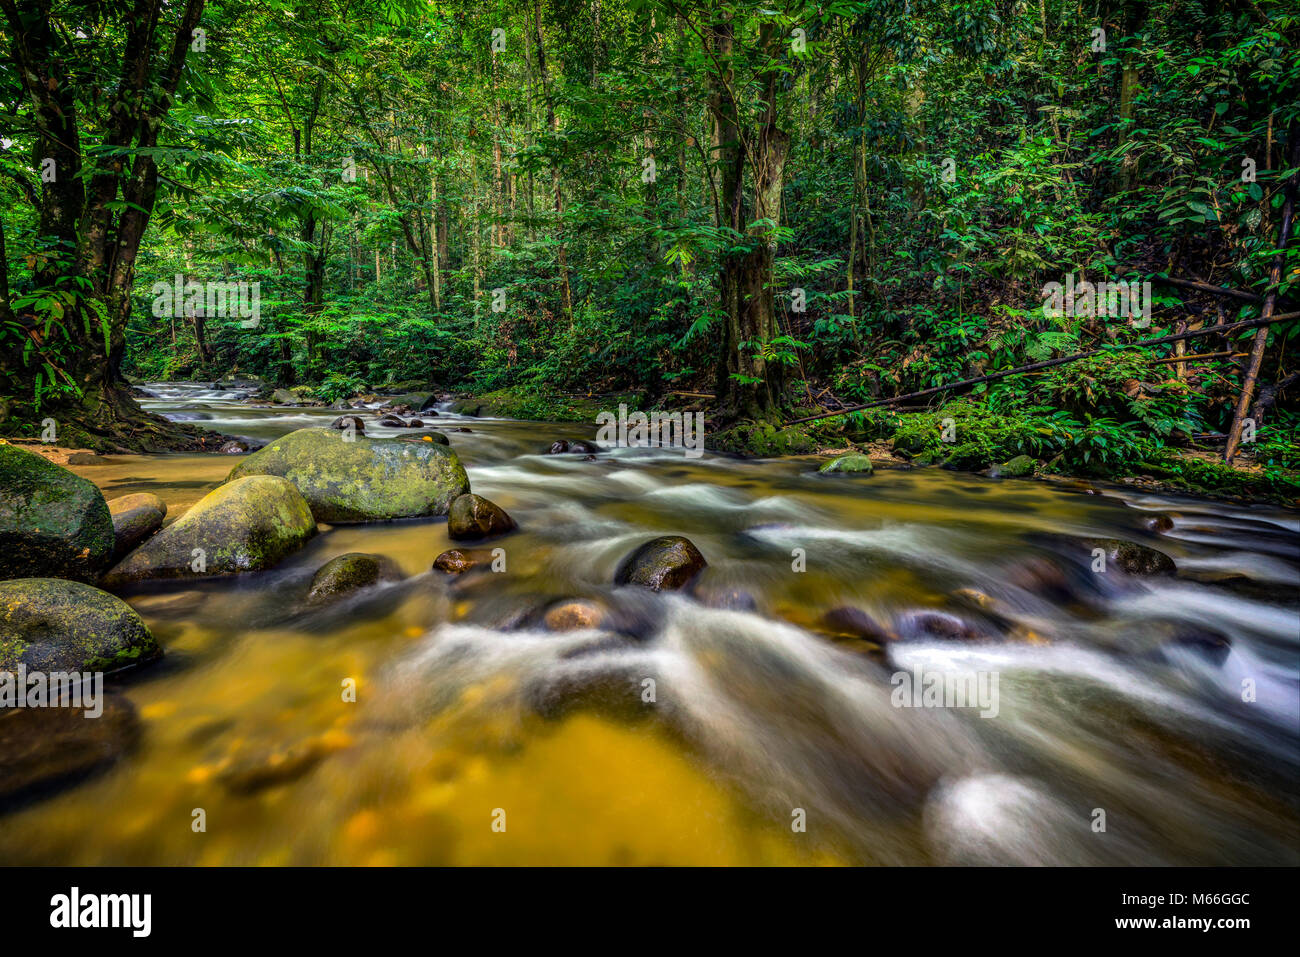 Congkak River, Hulu Langat, Selangor, Malaysia Stock Photo